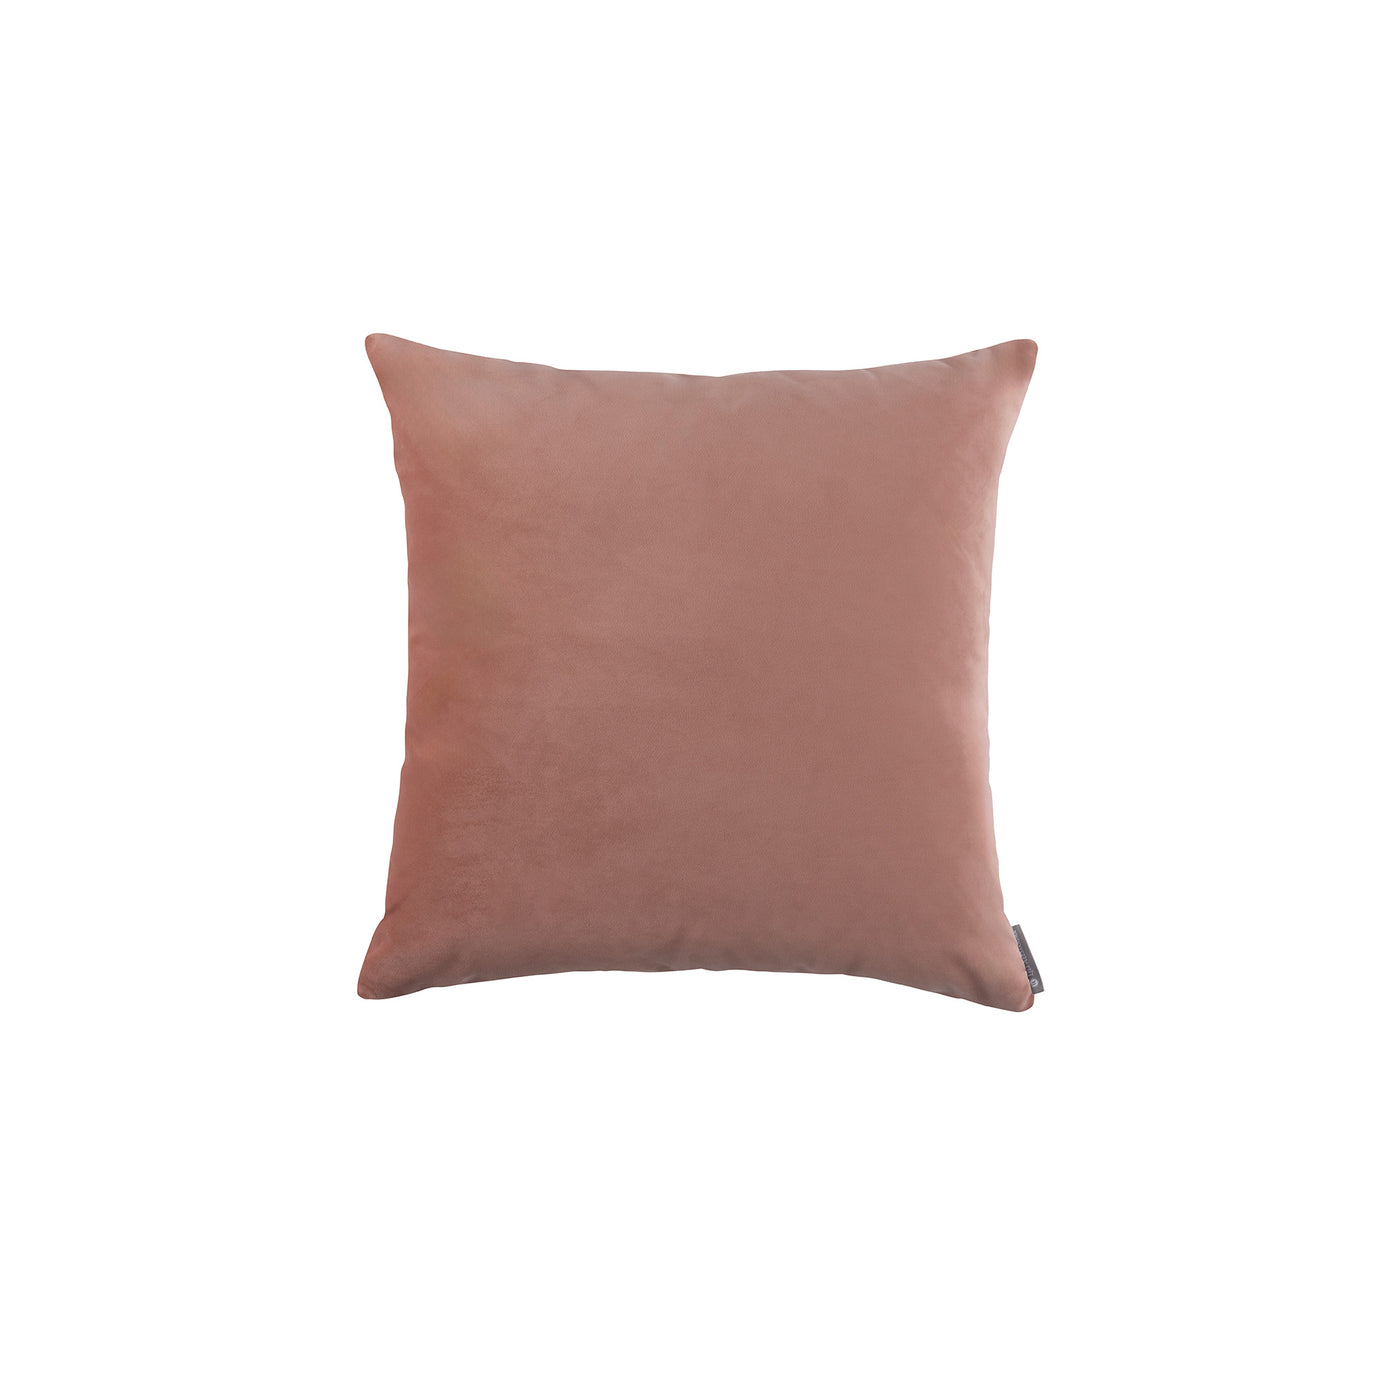 Vivid Shell Medium Square Pillow (24x24)